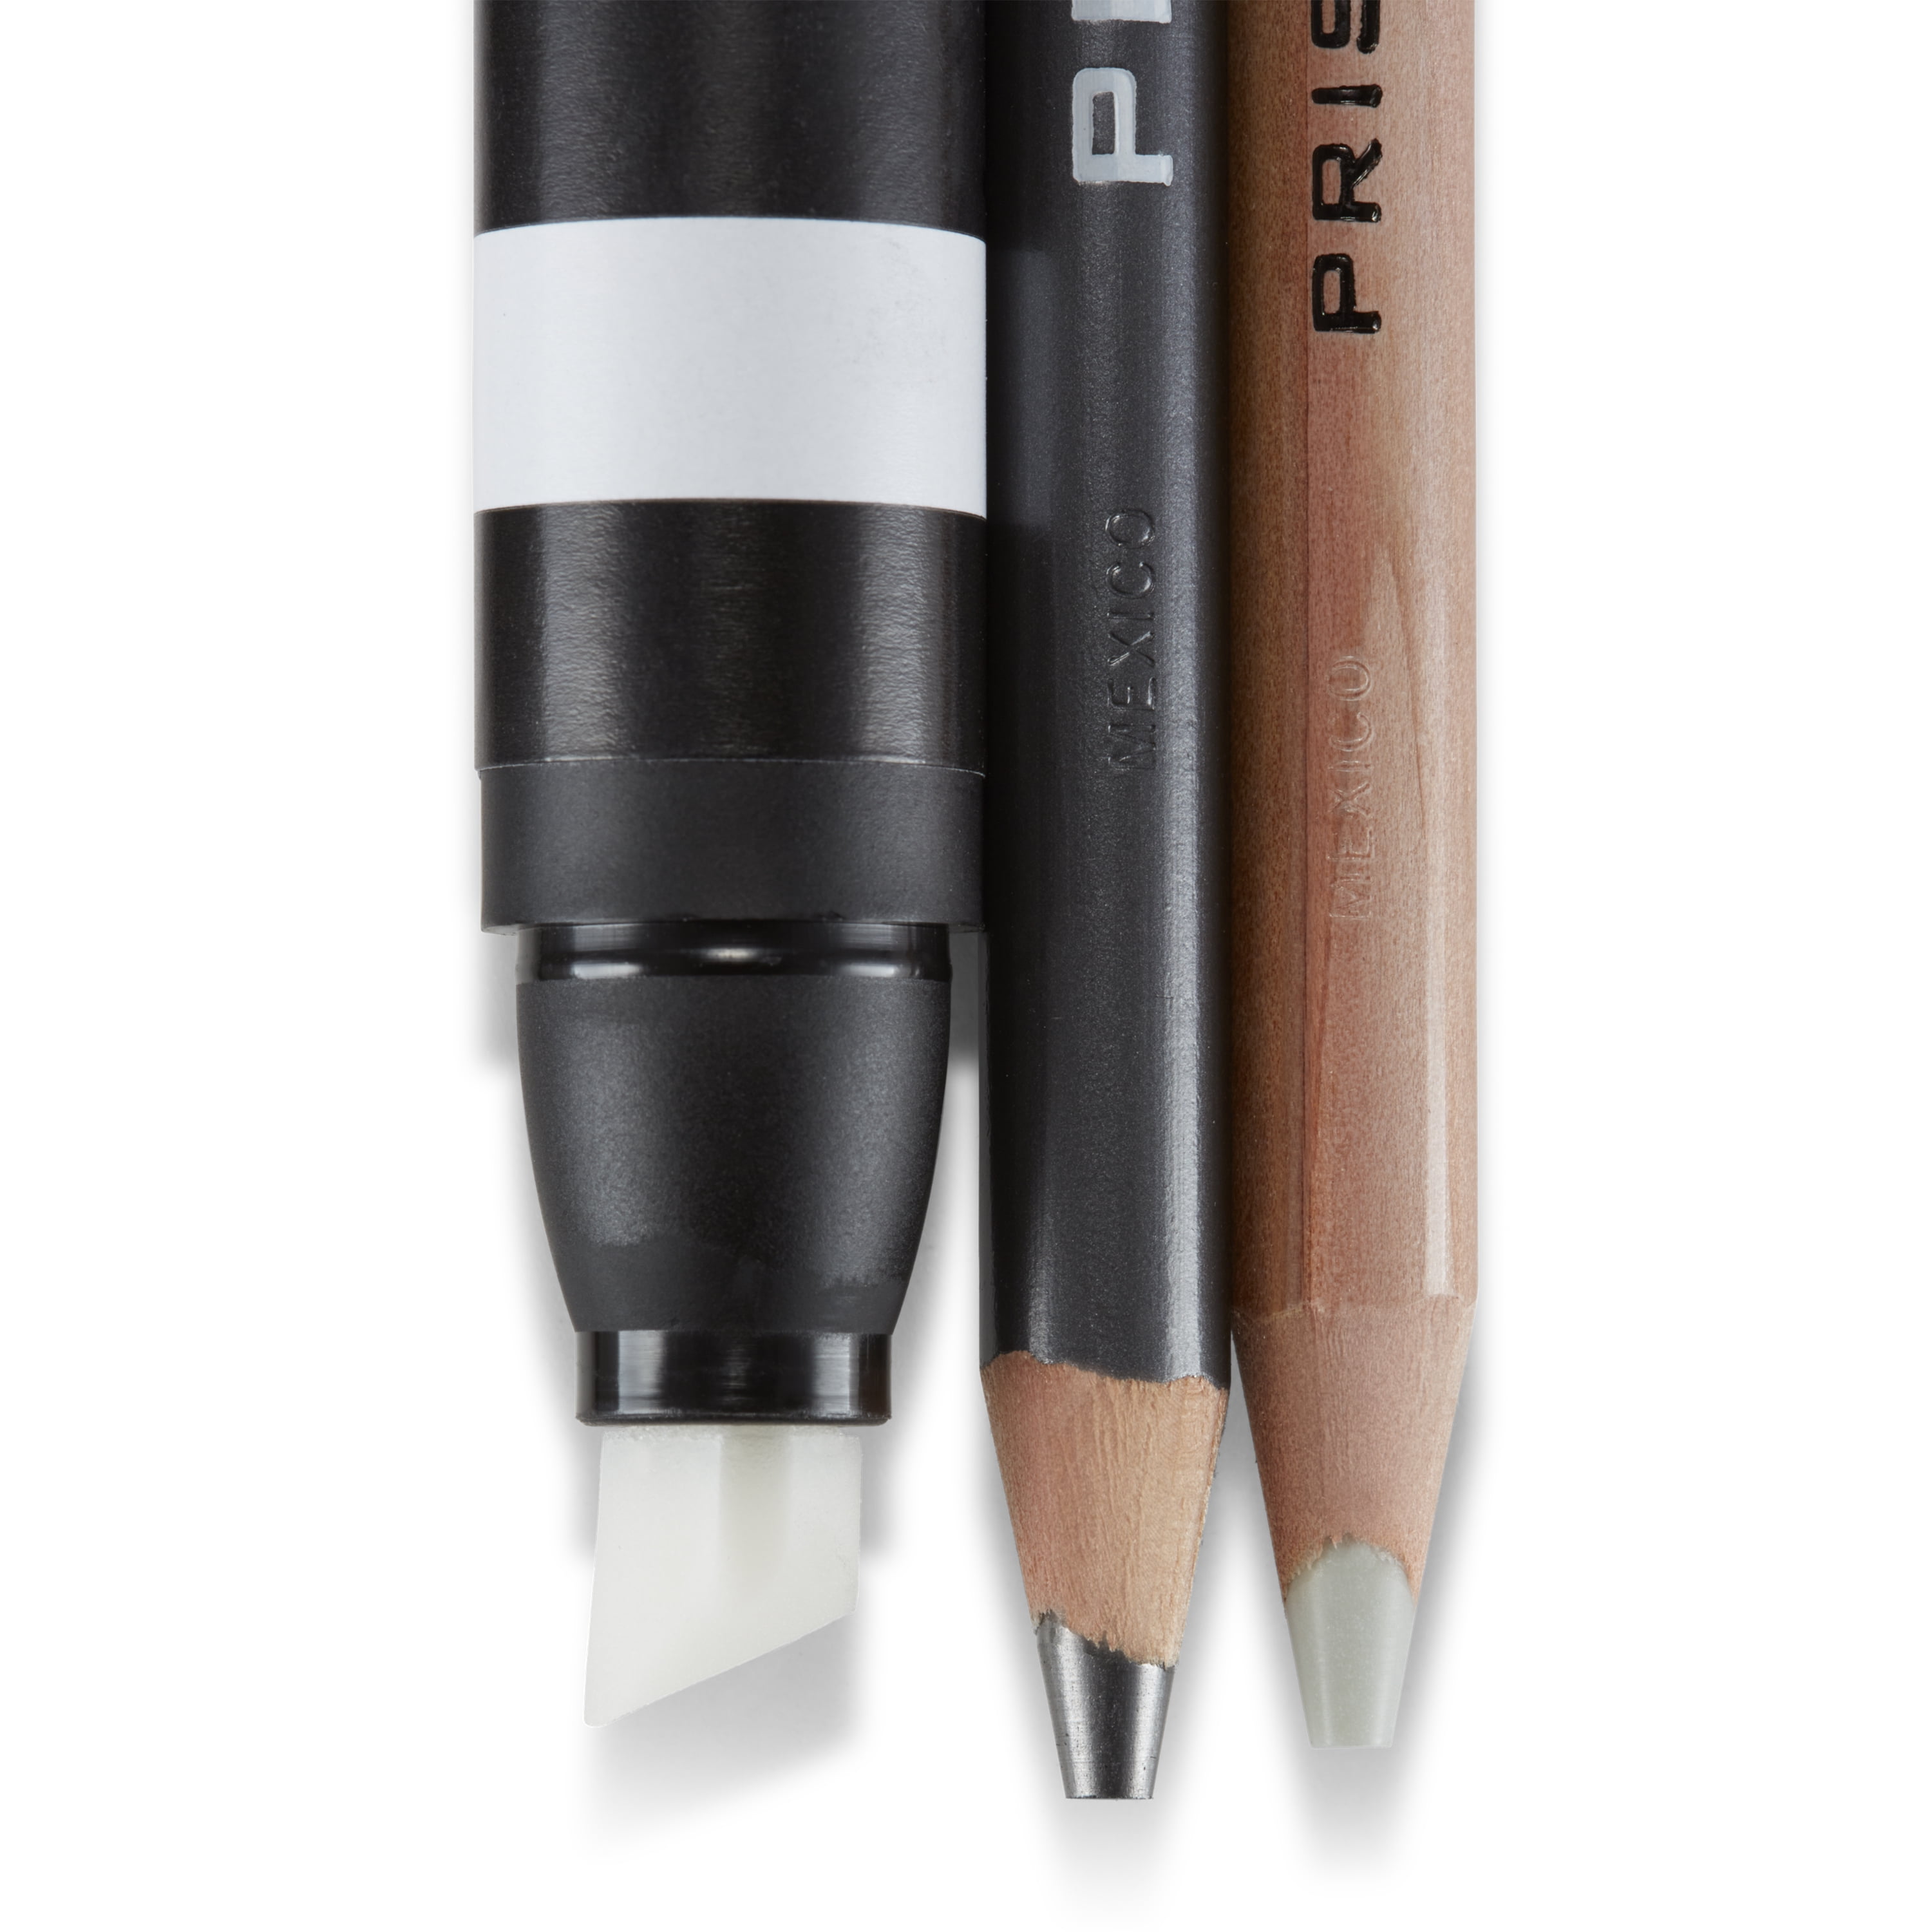 Prismacolor 2 Piece Premier Colorless Blender Pencils Plus 3 Eraser Set  Bundle 